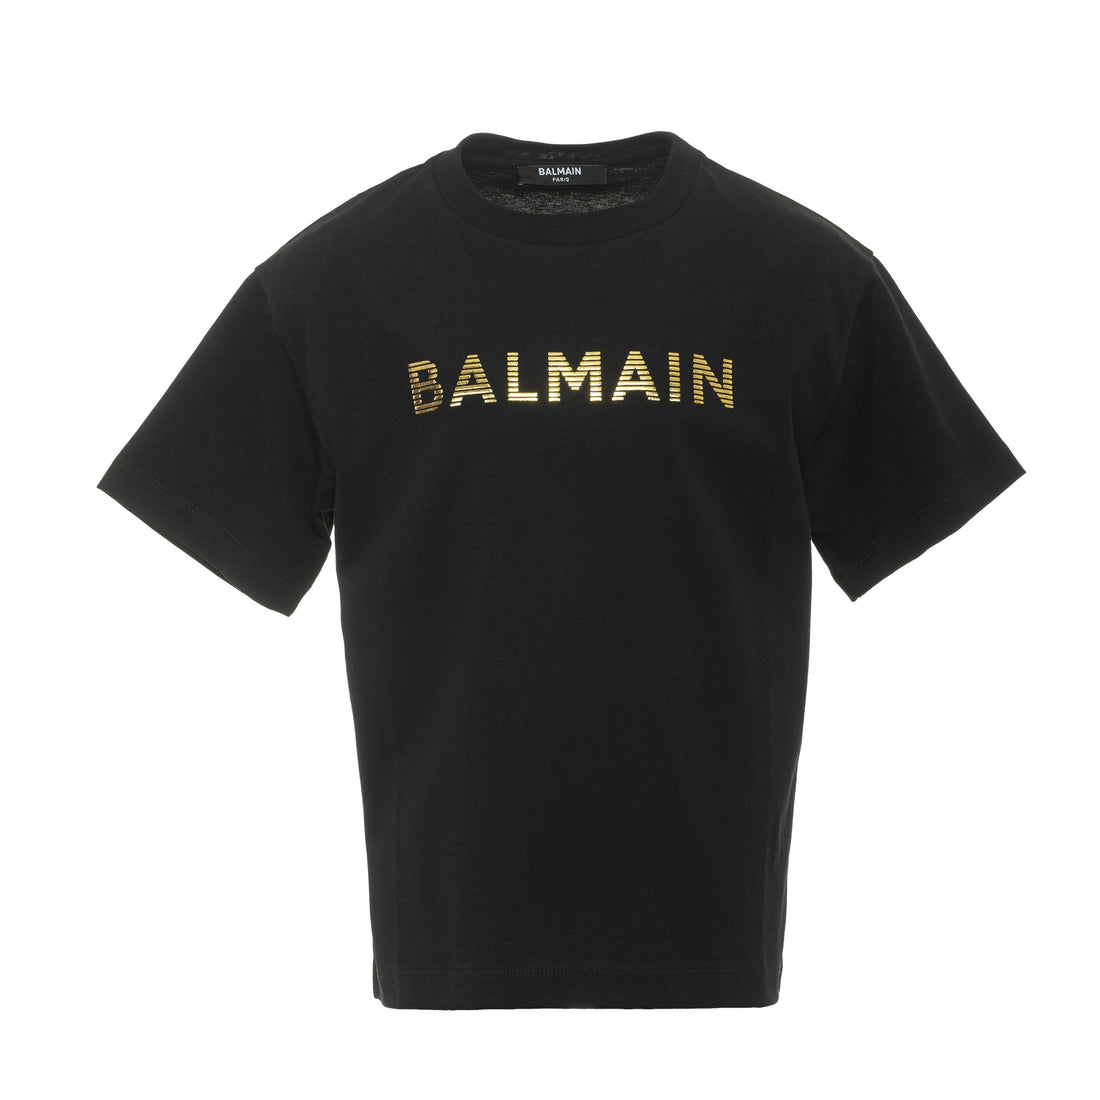 Balmain T-Shirt/Top Style: Bs8P41930Or